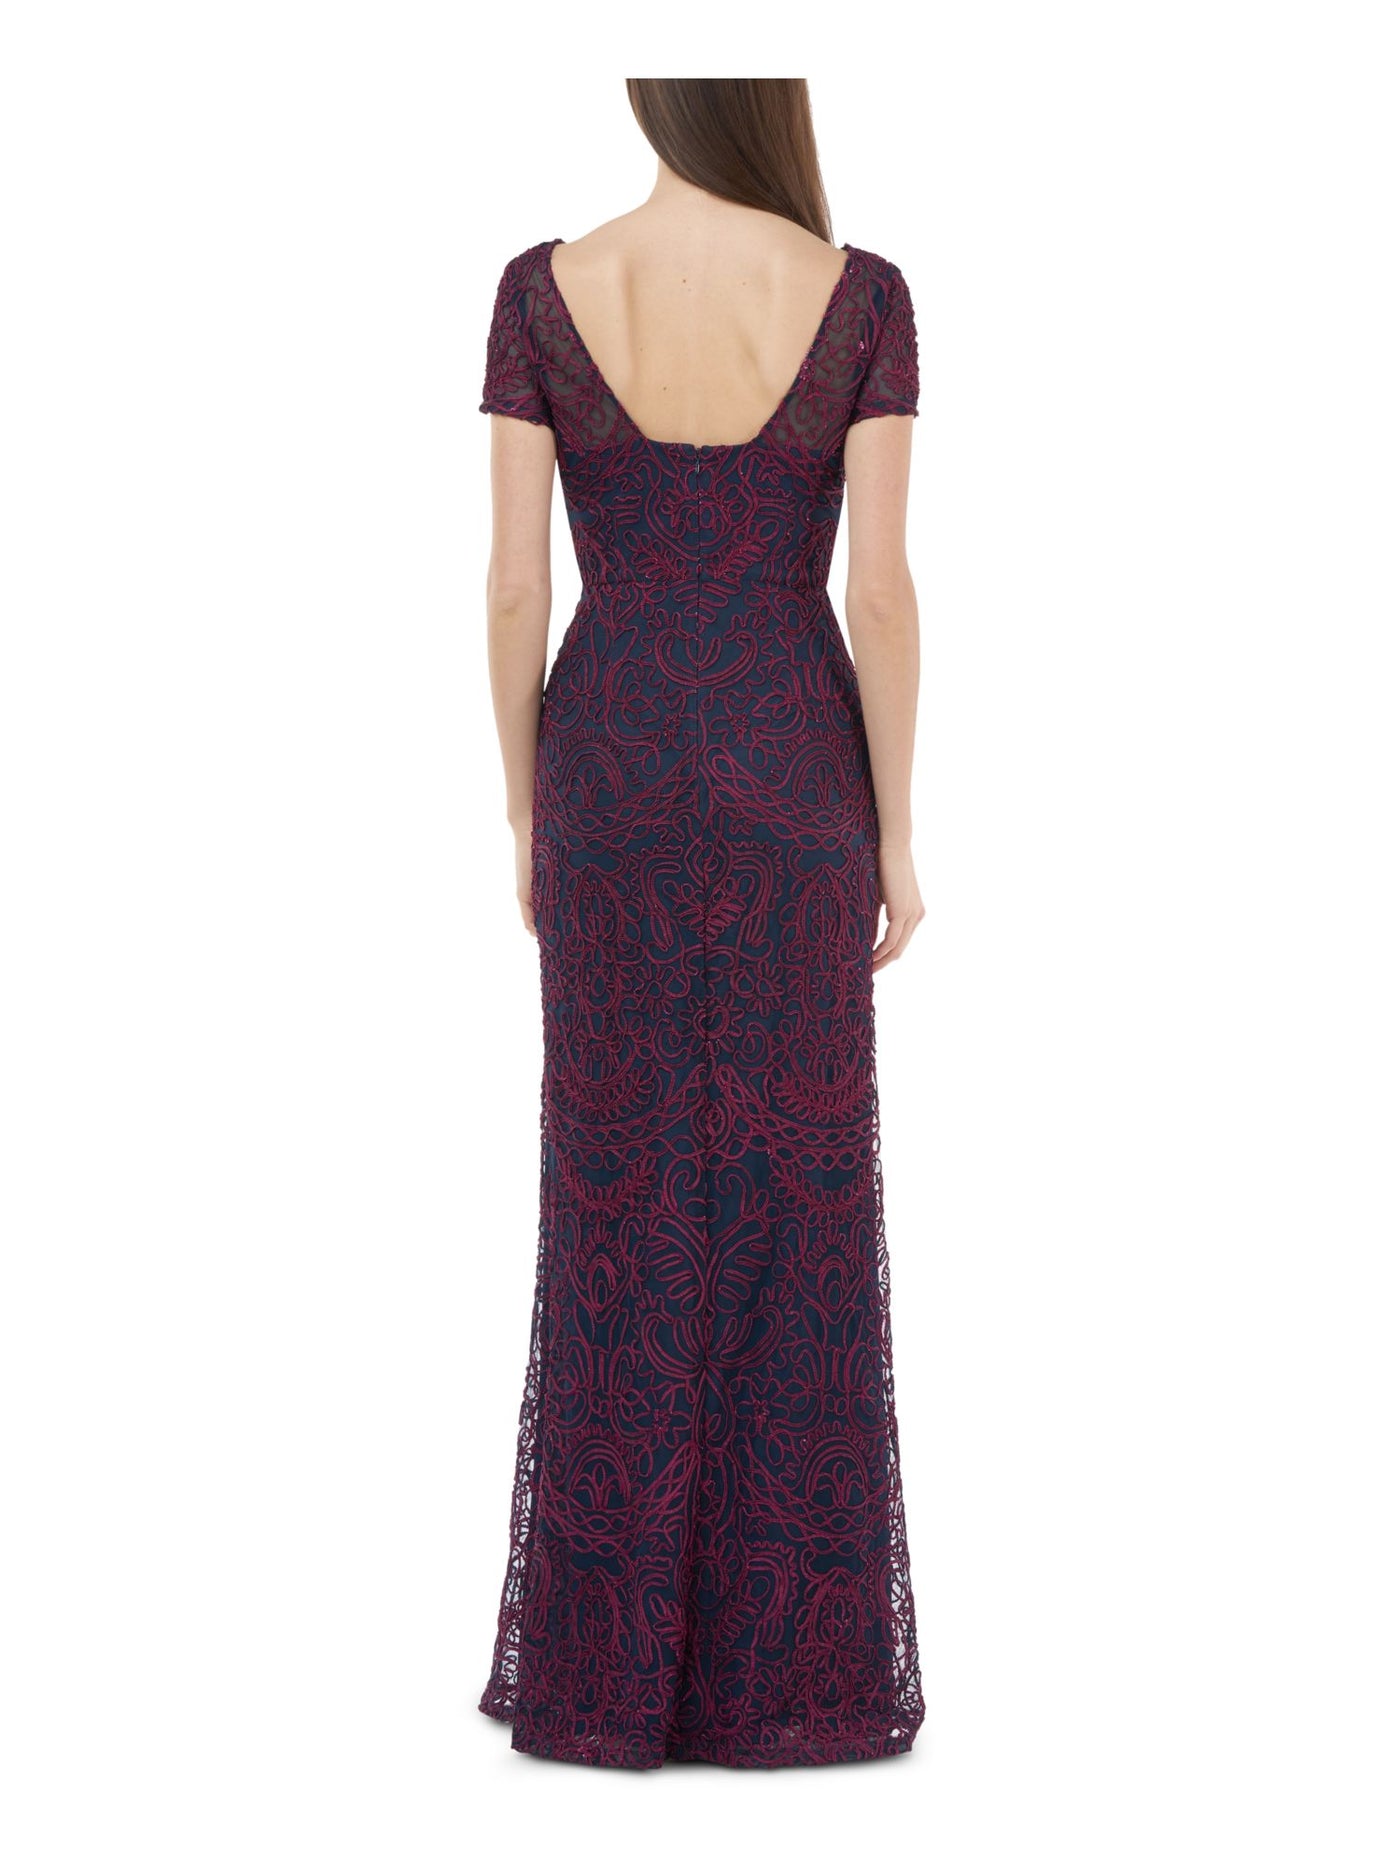 JS COLLECTION Womens Burgundy Short Sleeve Illusion Neckline Full-Length Evening Mermaid Dress 6